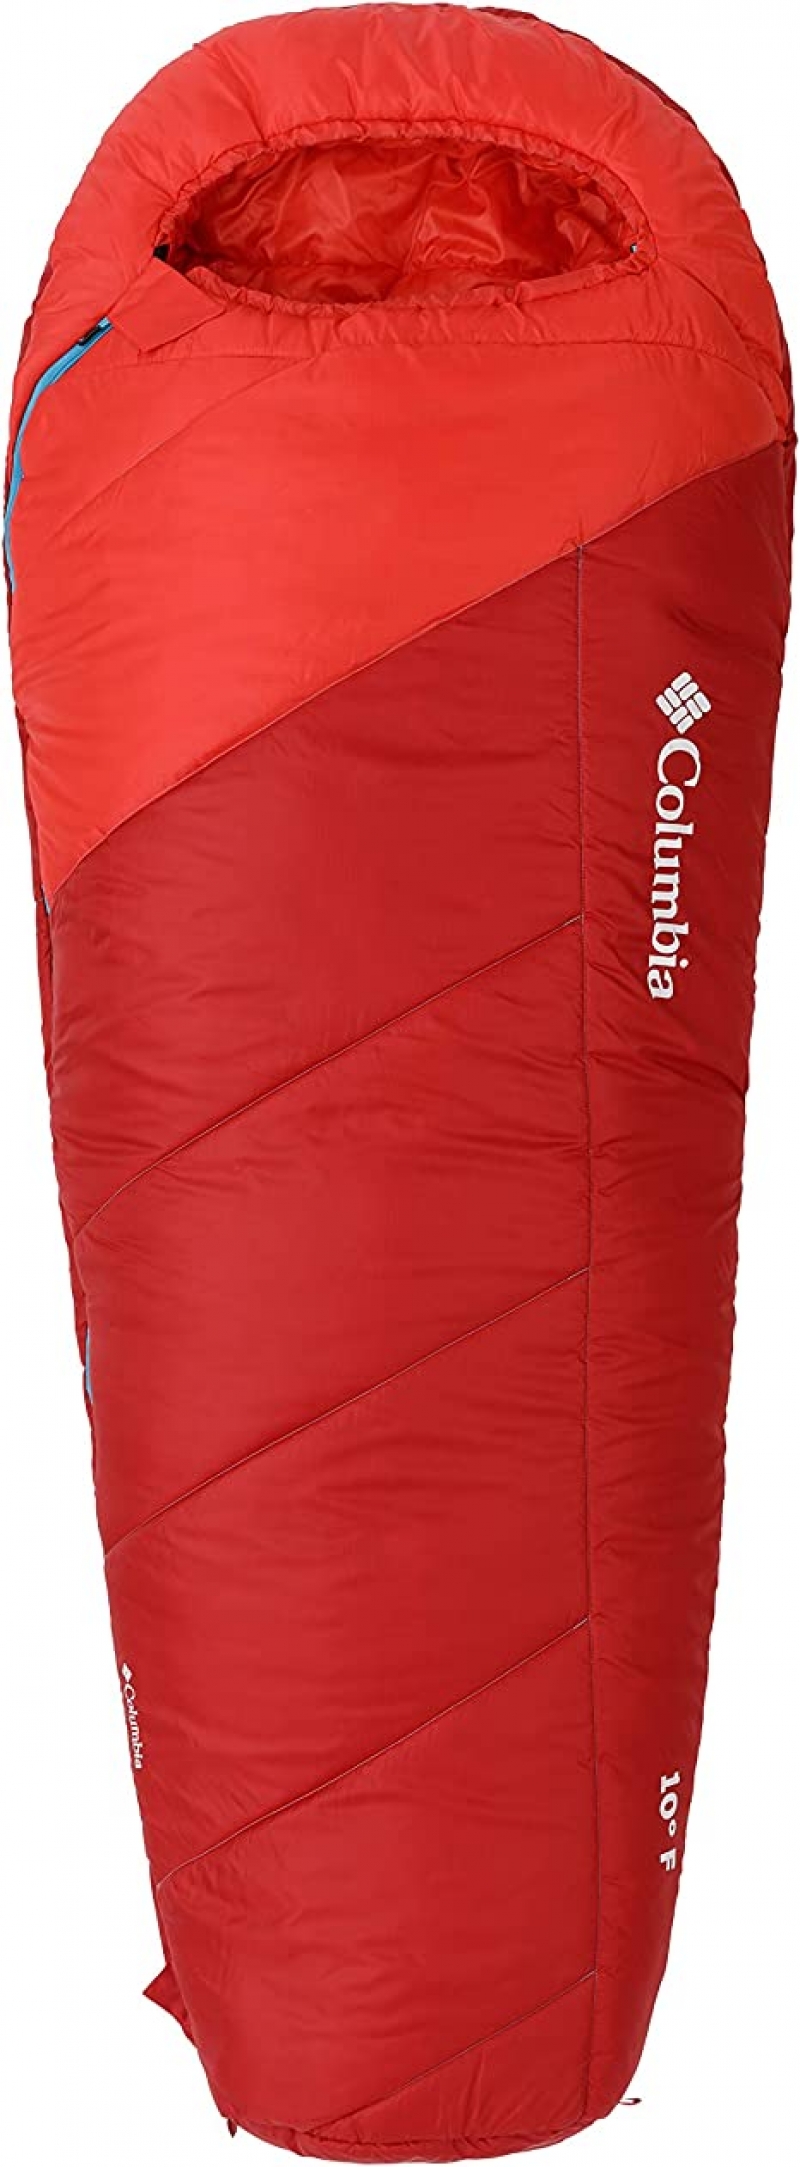 ihocon: Columbia 10 Degree Mount Tabor Mummy Sleeping Bag Regular Length/Extra-Long睡袋